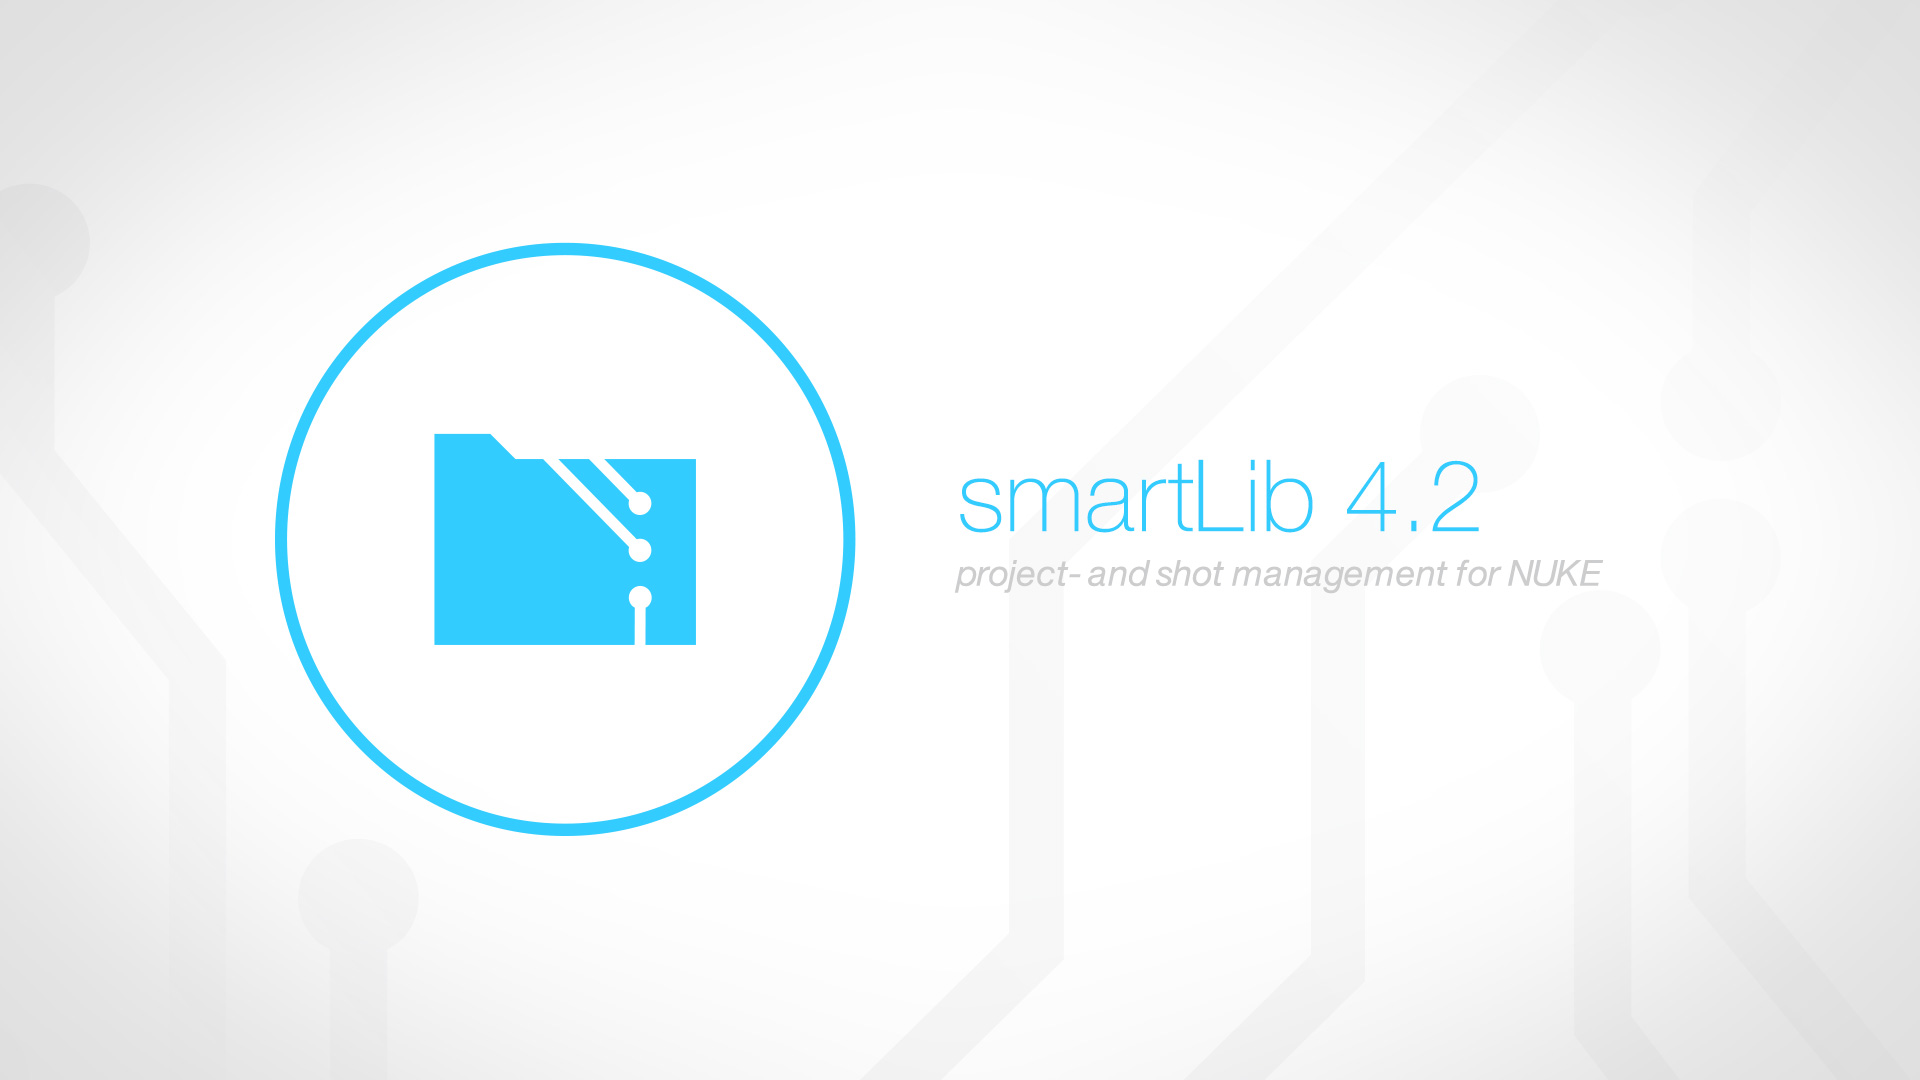 smartLib 4.2